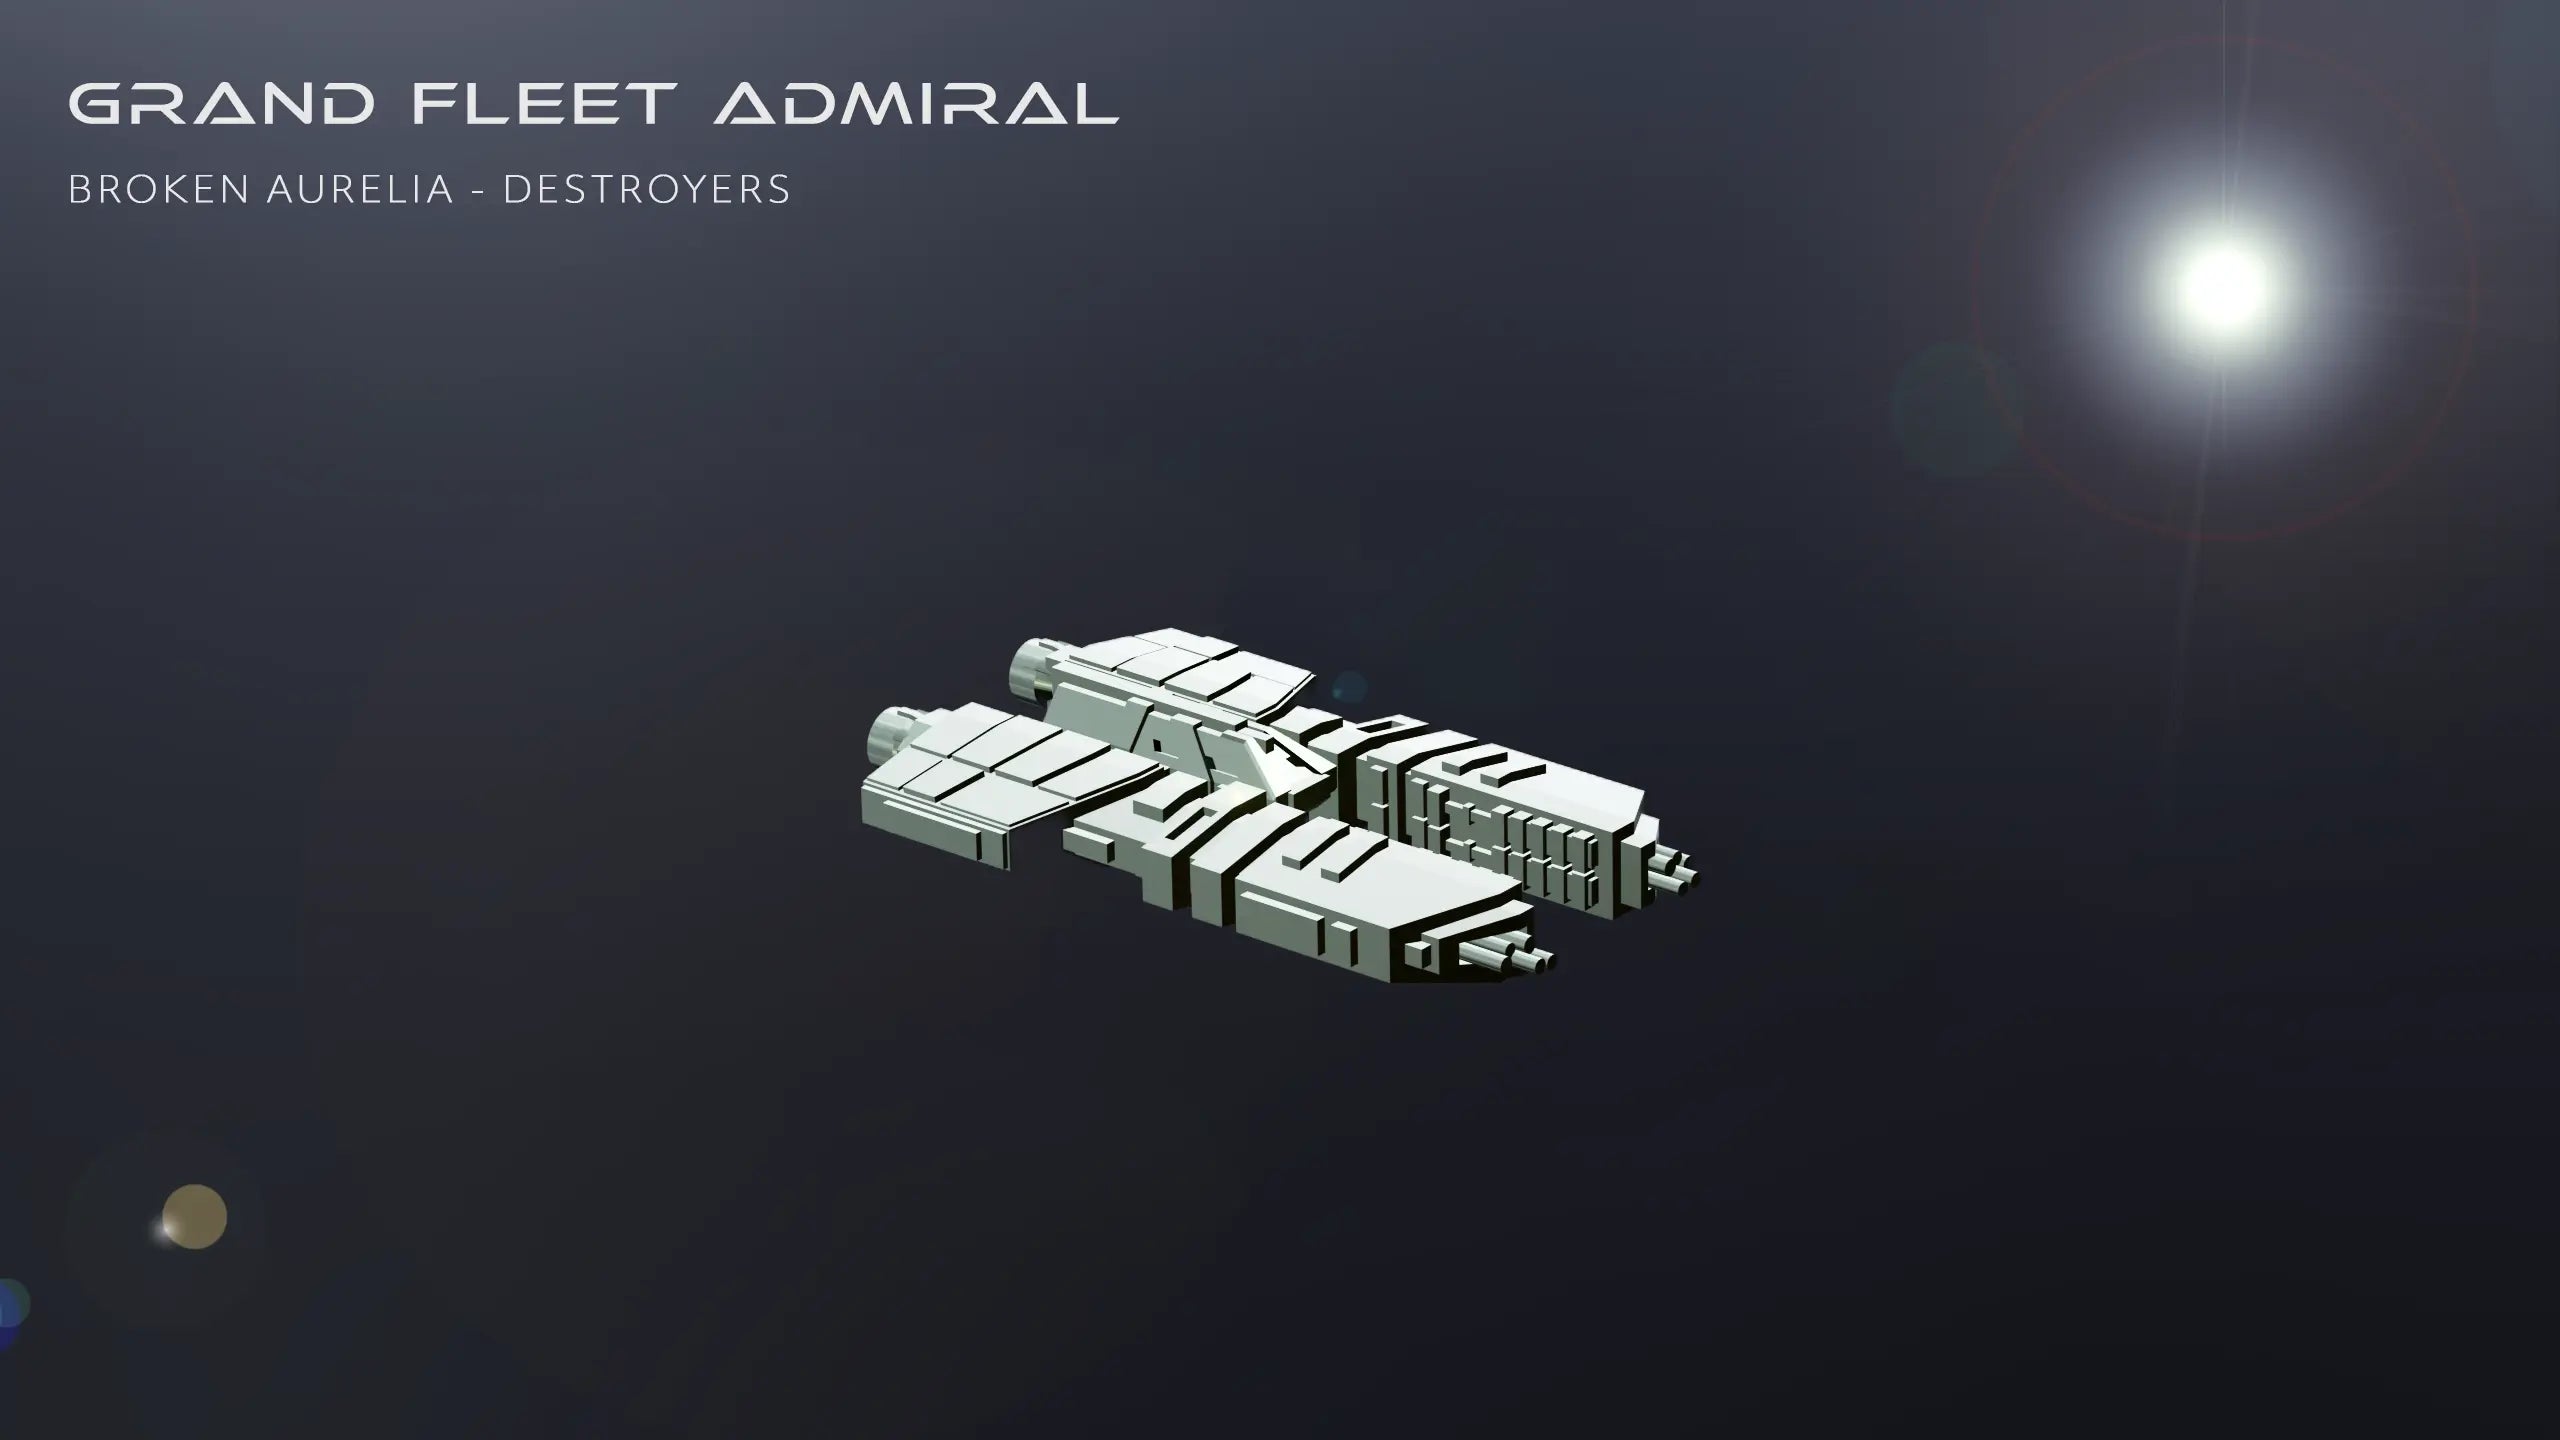 Broken Aurelia - Destroyer Grand Fleet Admiral